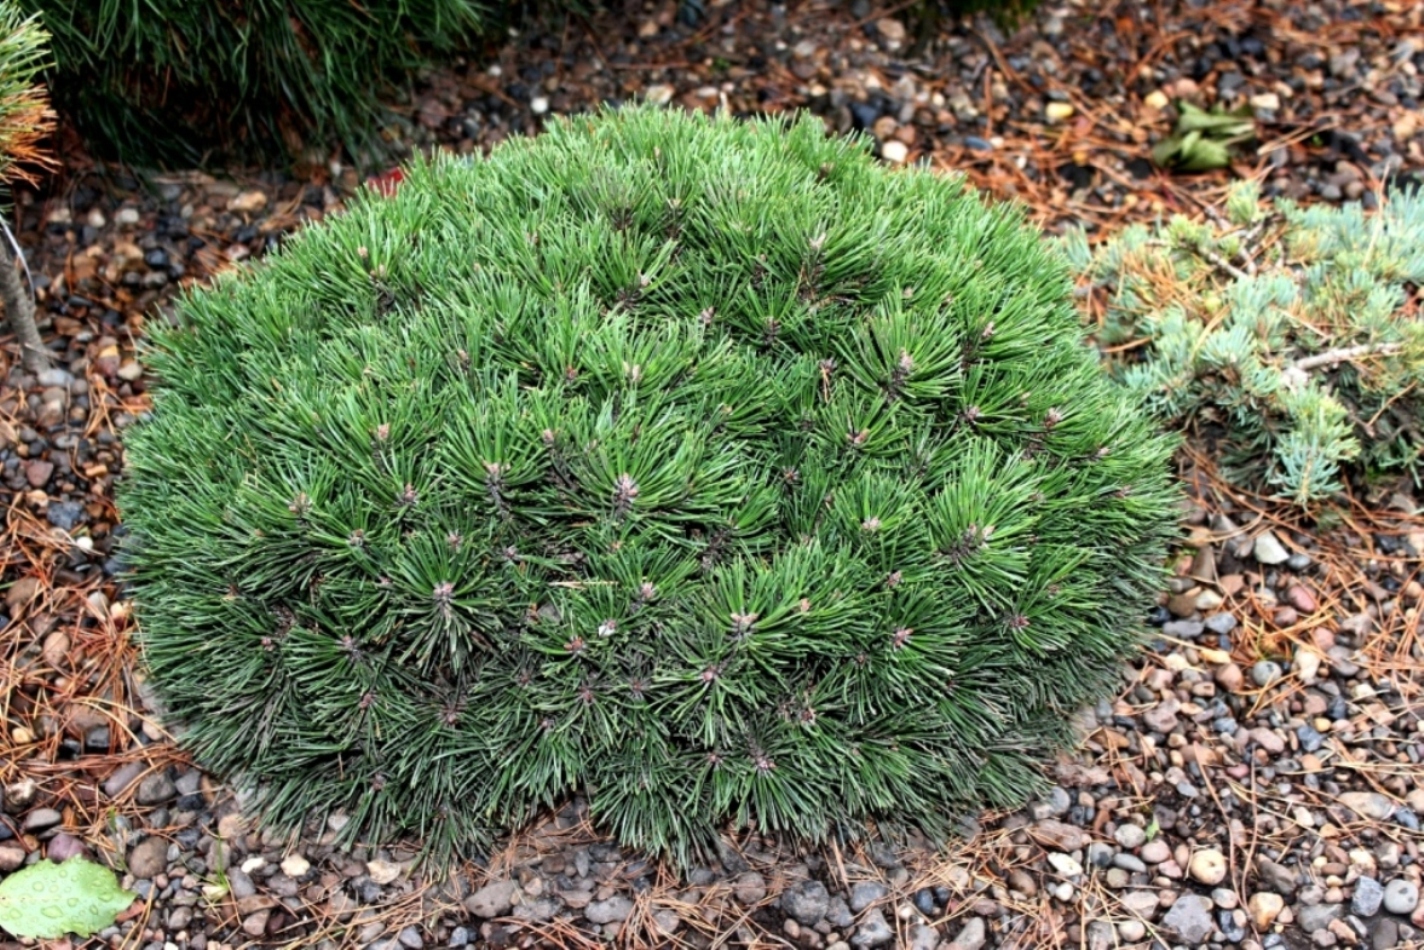 Pinus uncinata Jezek. Название говорит само за себя.  